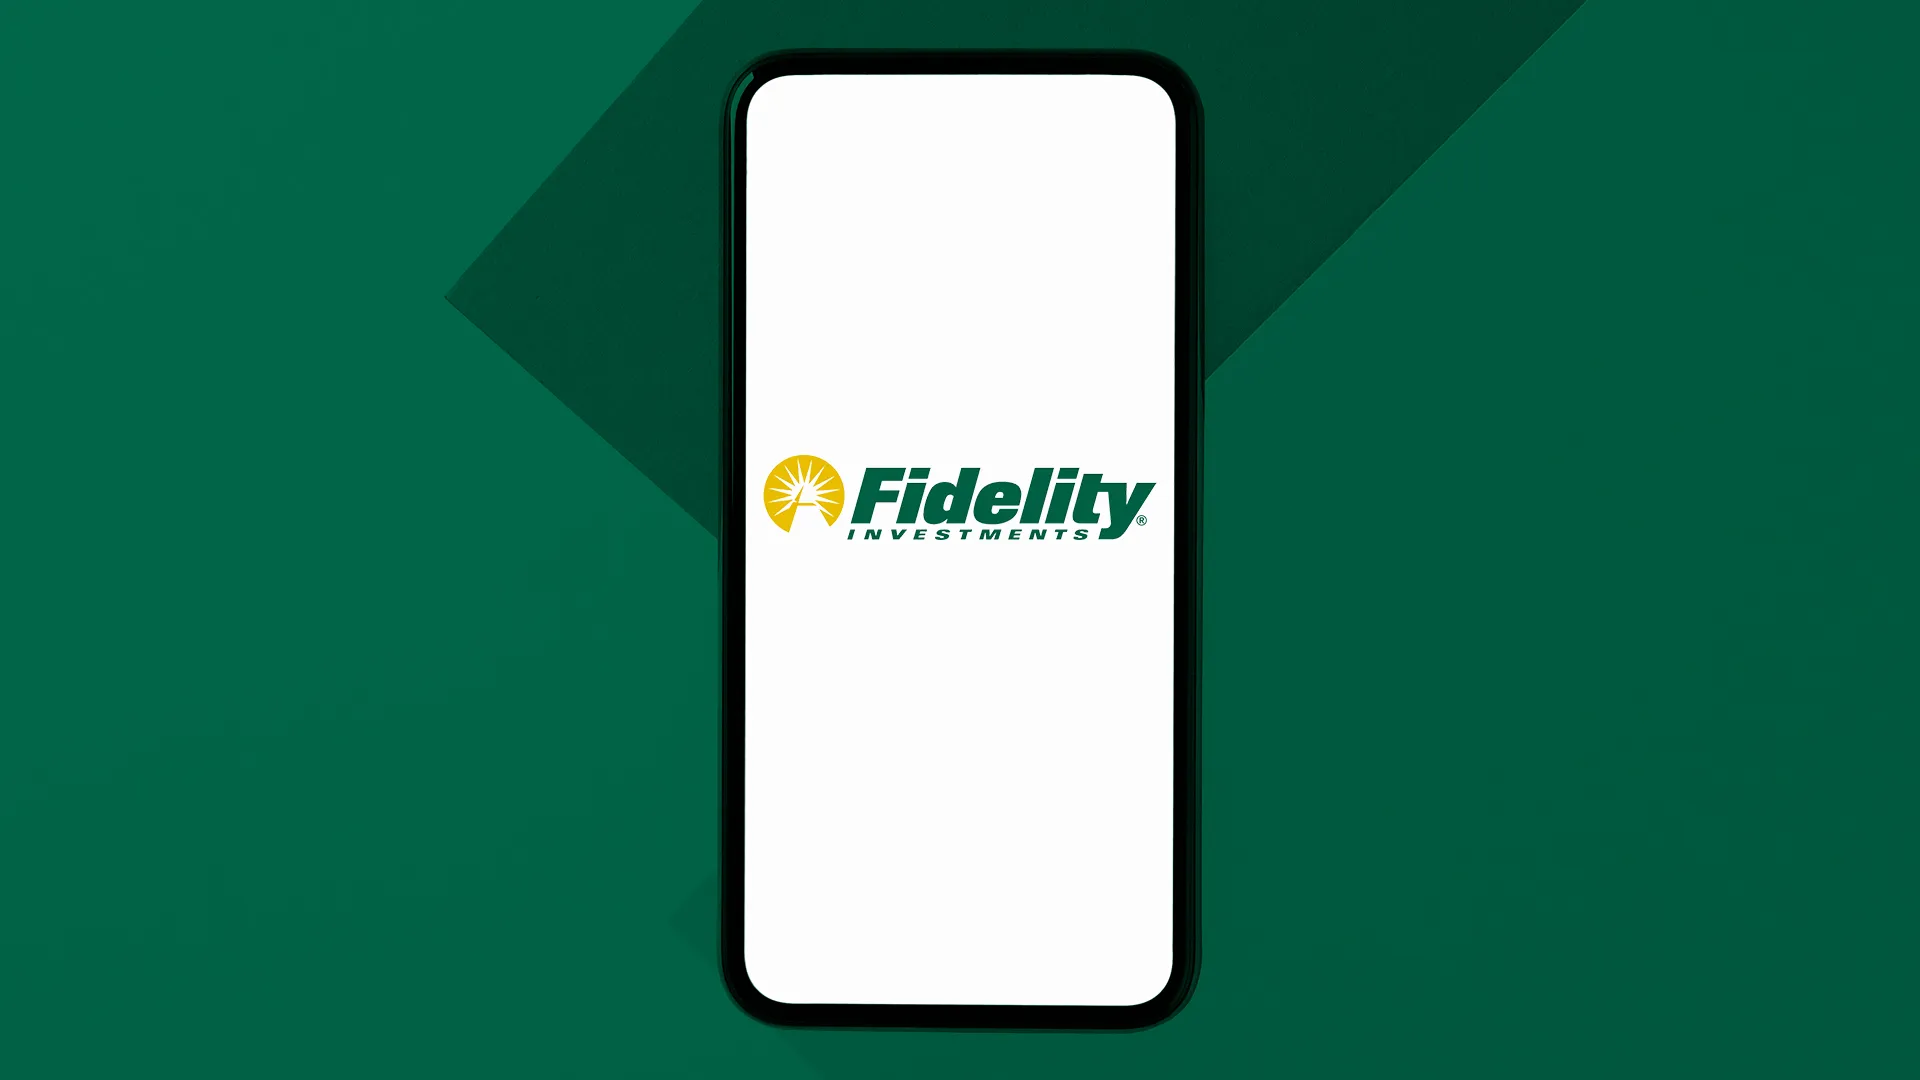 Fidelity app open on smartphone with dark green background.